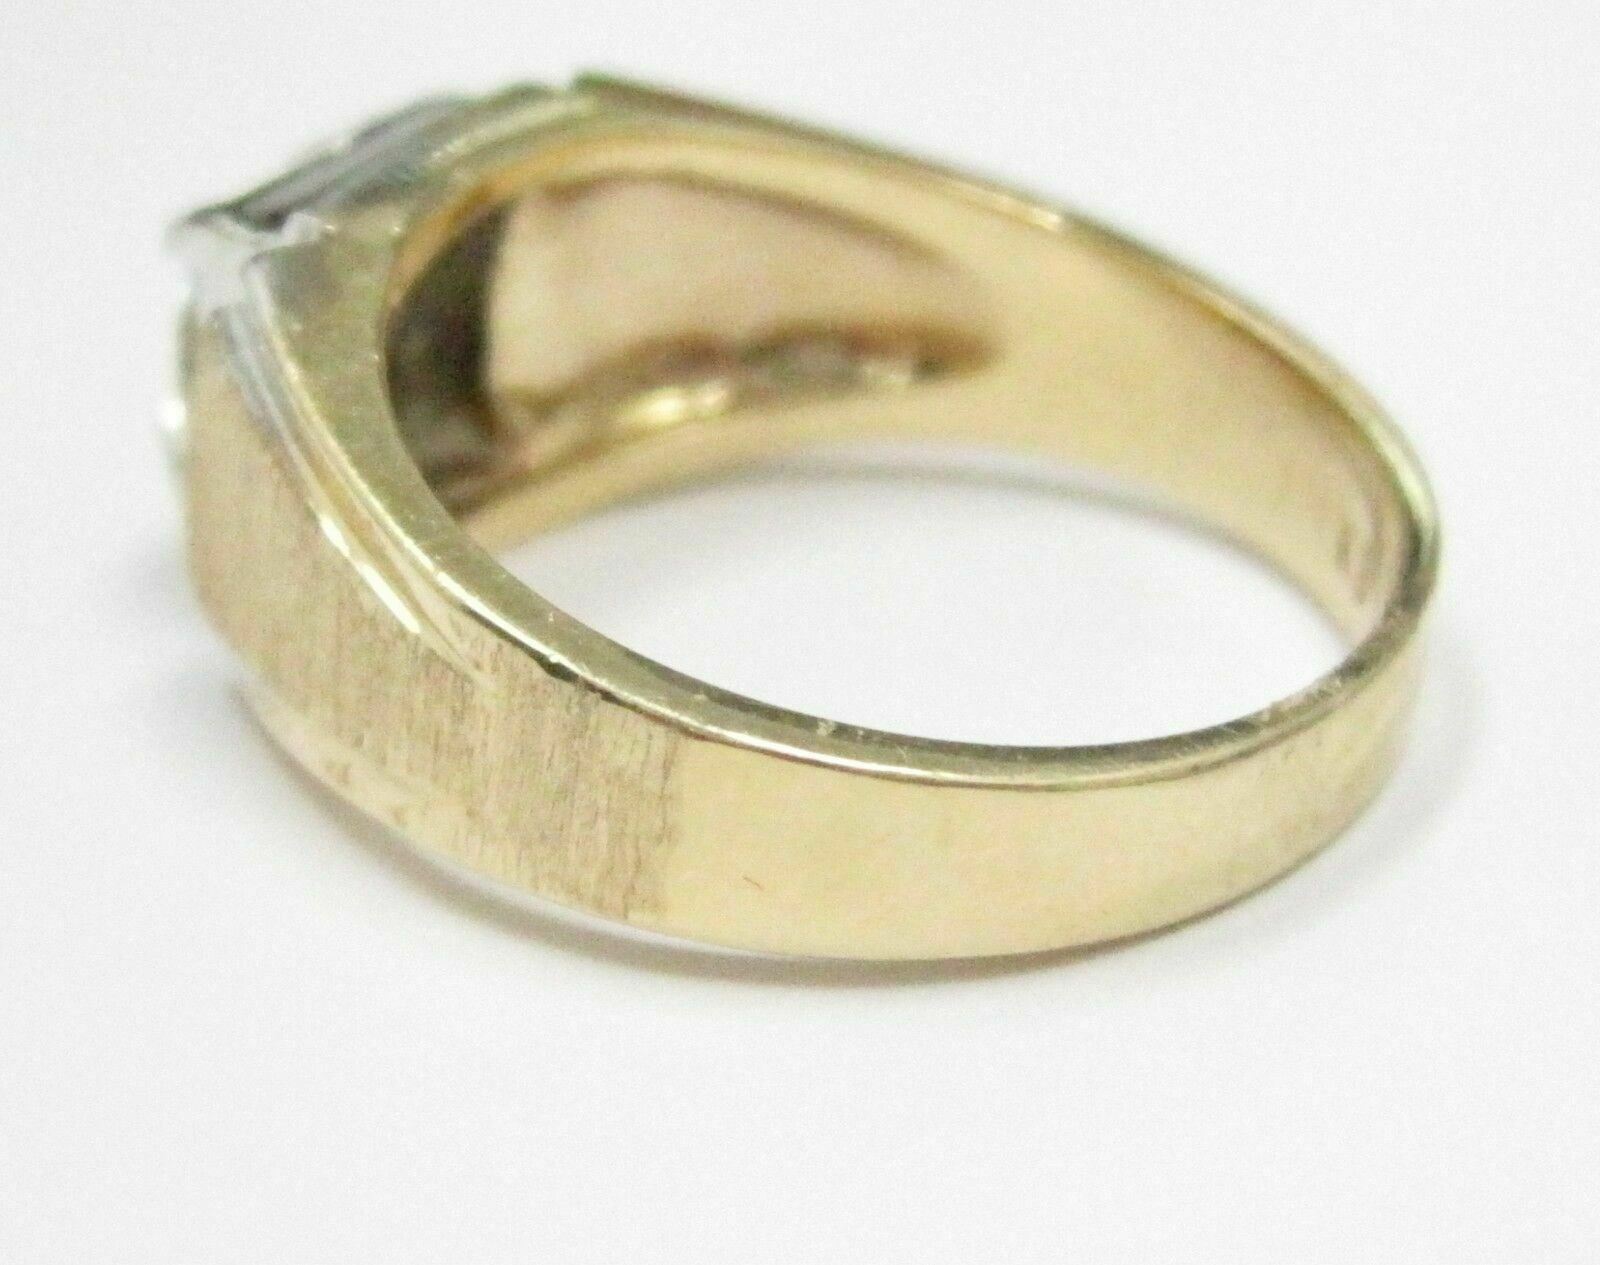 .87Ct Round Brilliant Cut Diamond Engagement Ring Size 9.5 H VS2 14k Yellow Gold